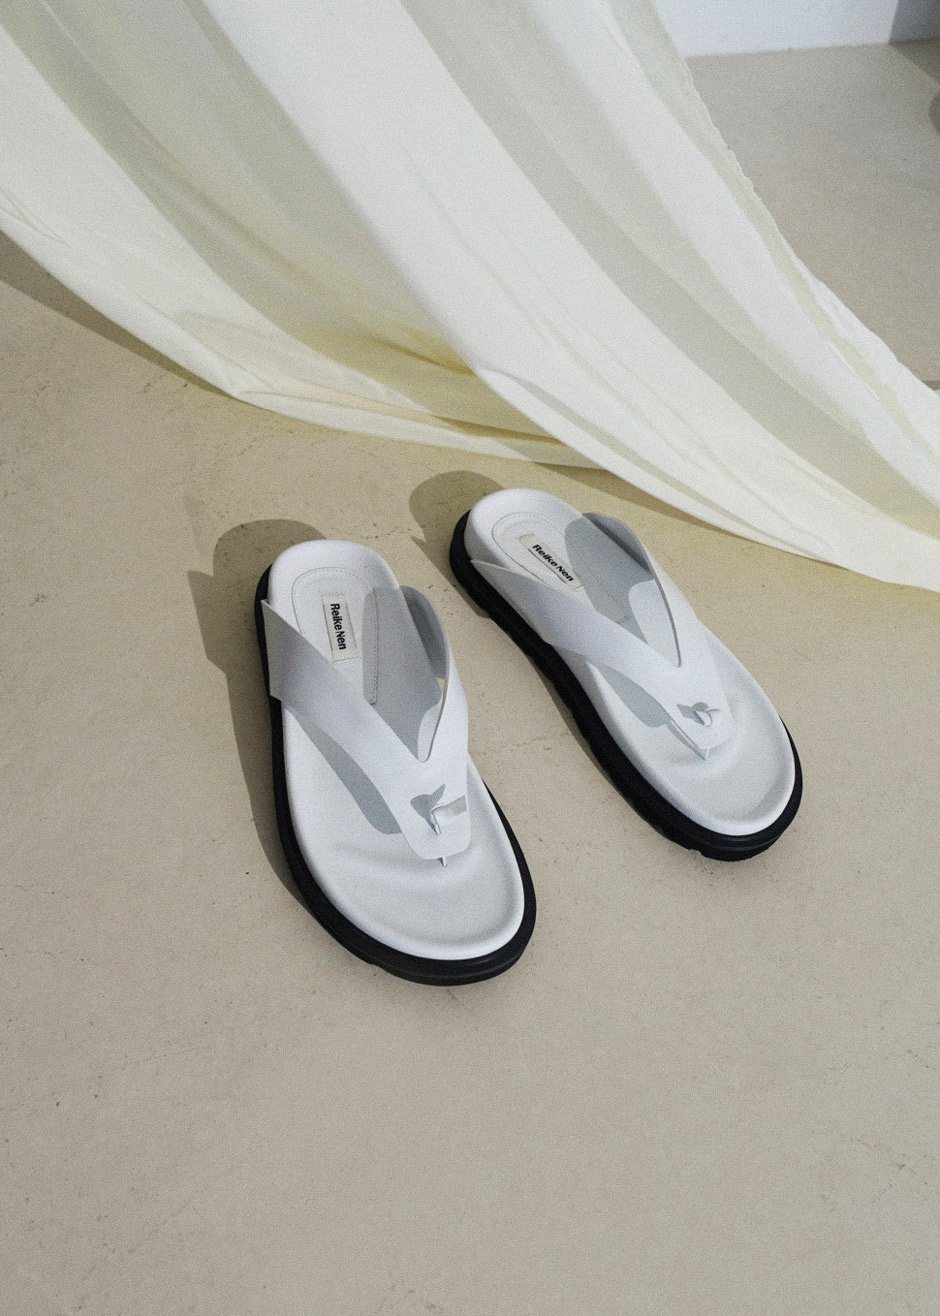 Reike Nen Leather Flip Flop Sandals - White